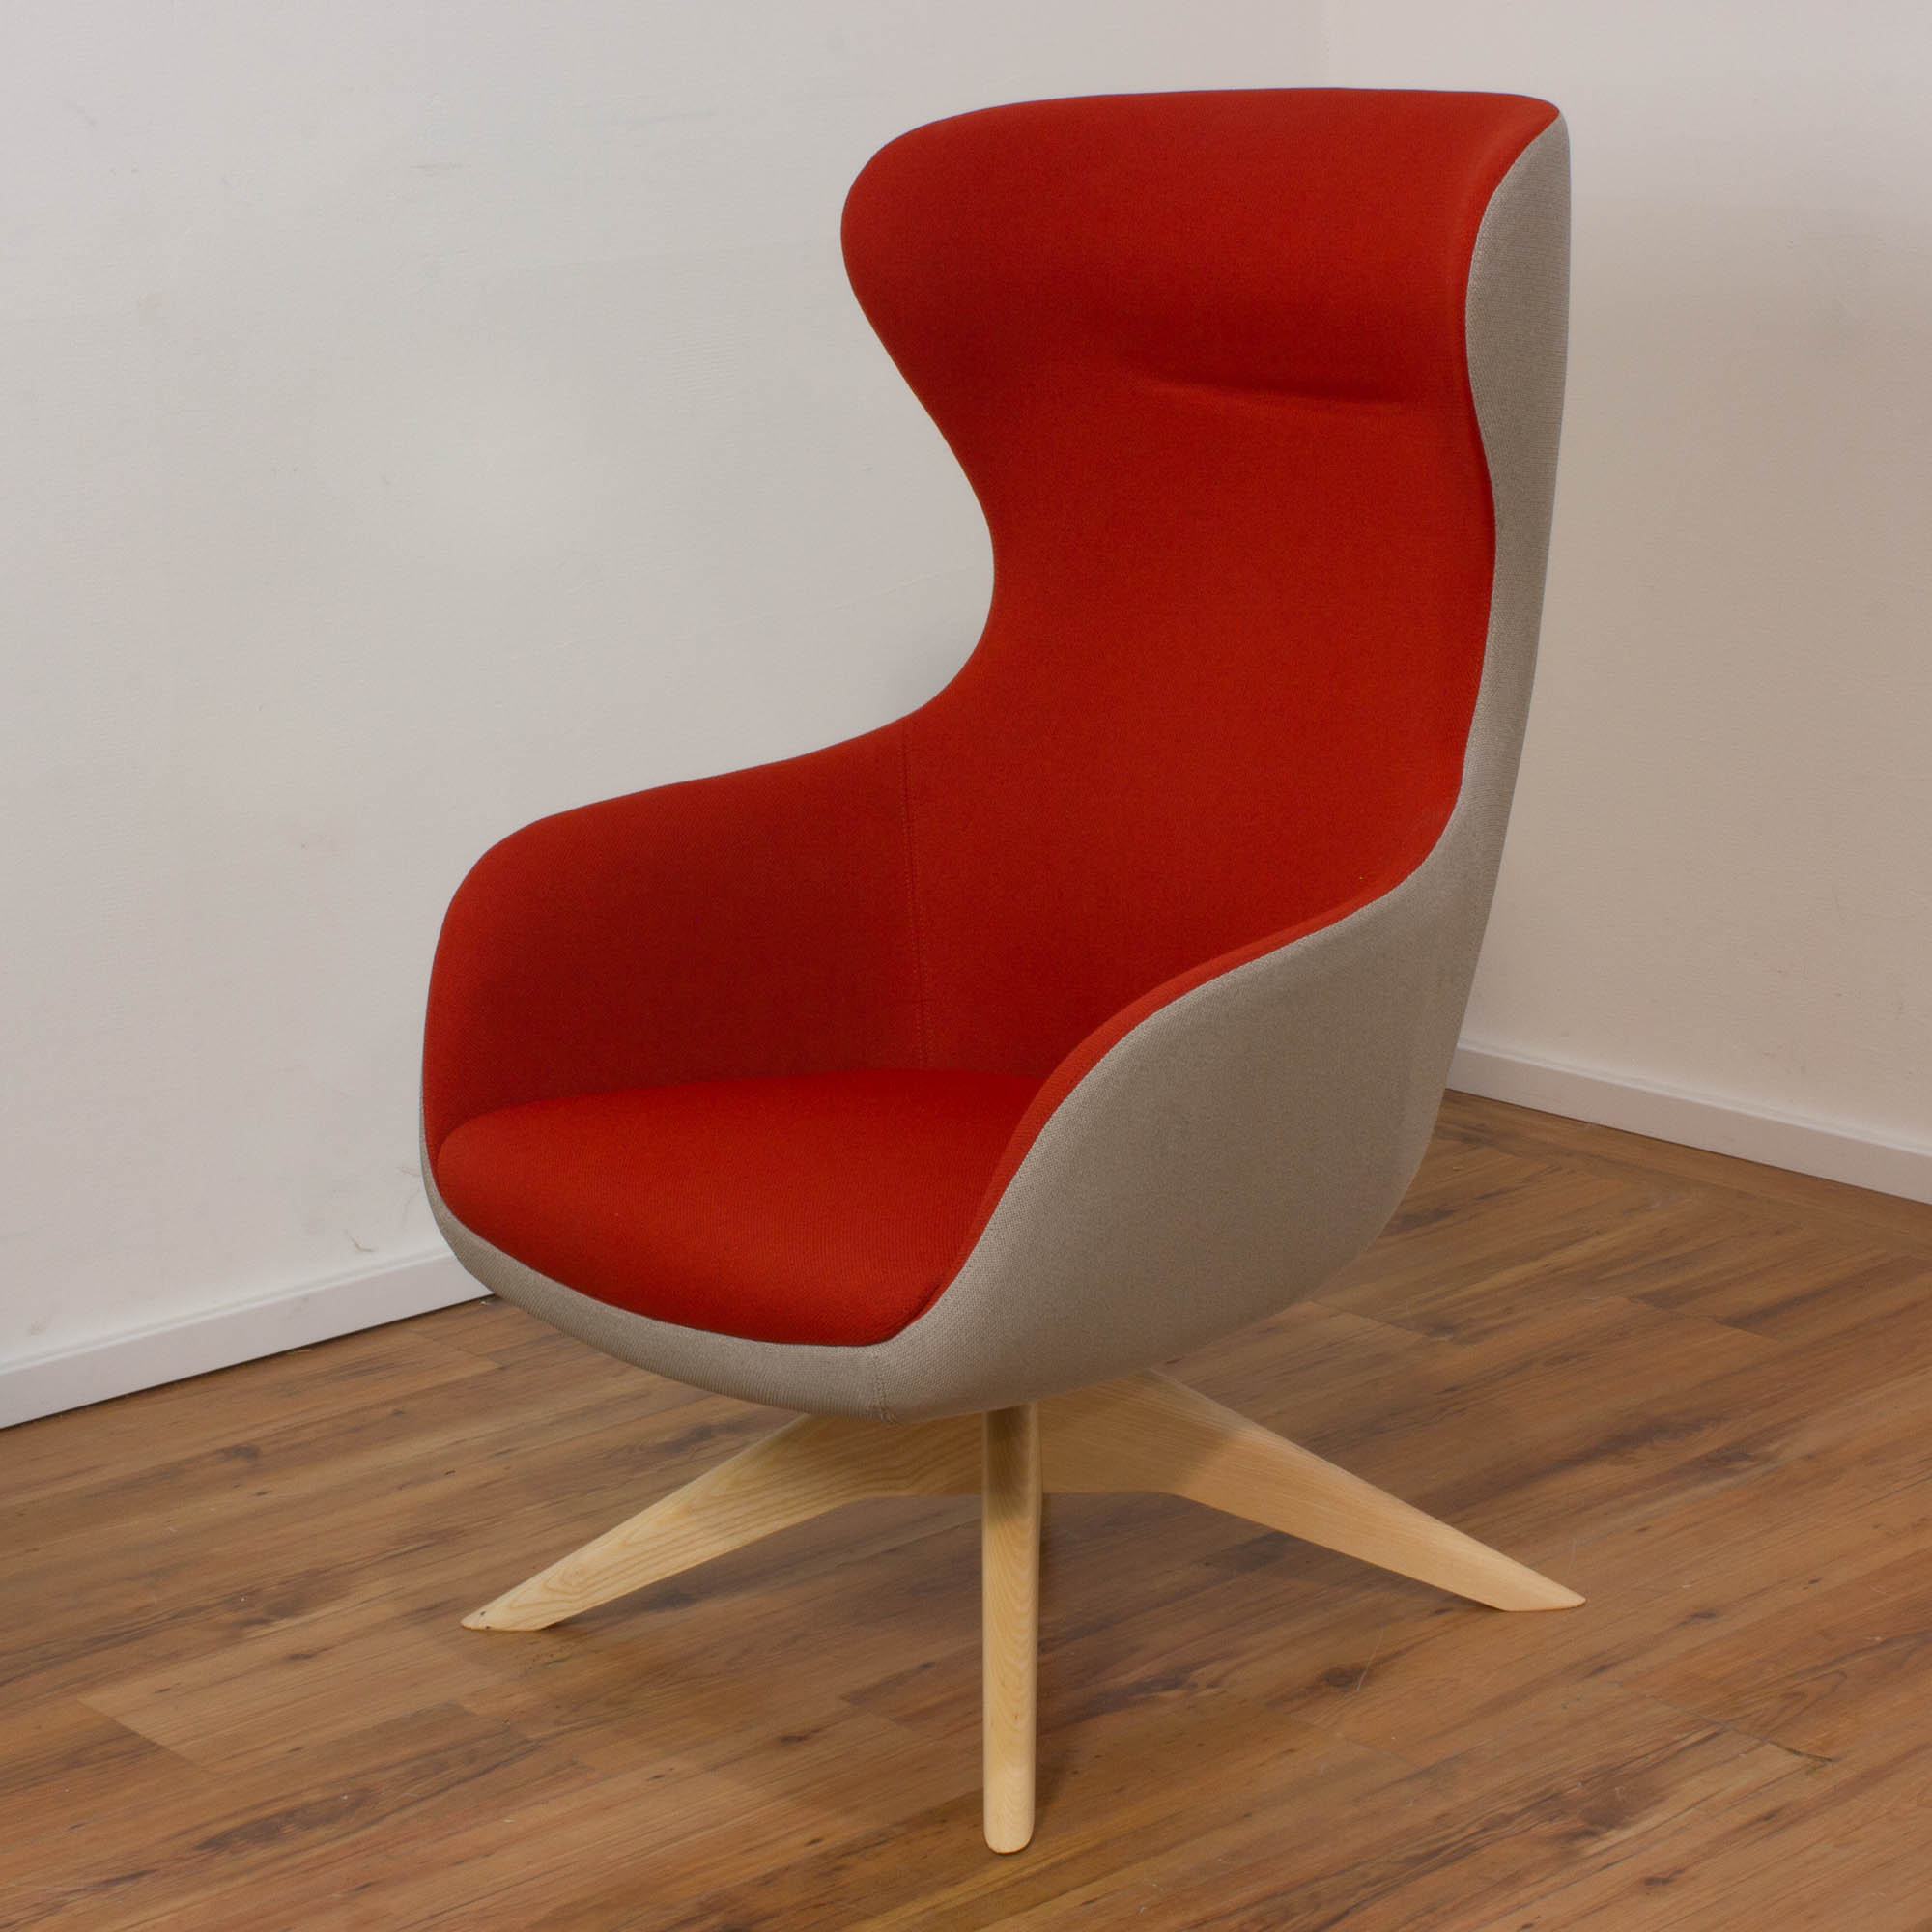 La Manufacture du Design - Assemblage - Design-Sessel - Stoff grau und orange